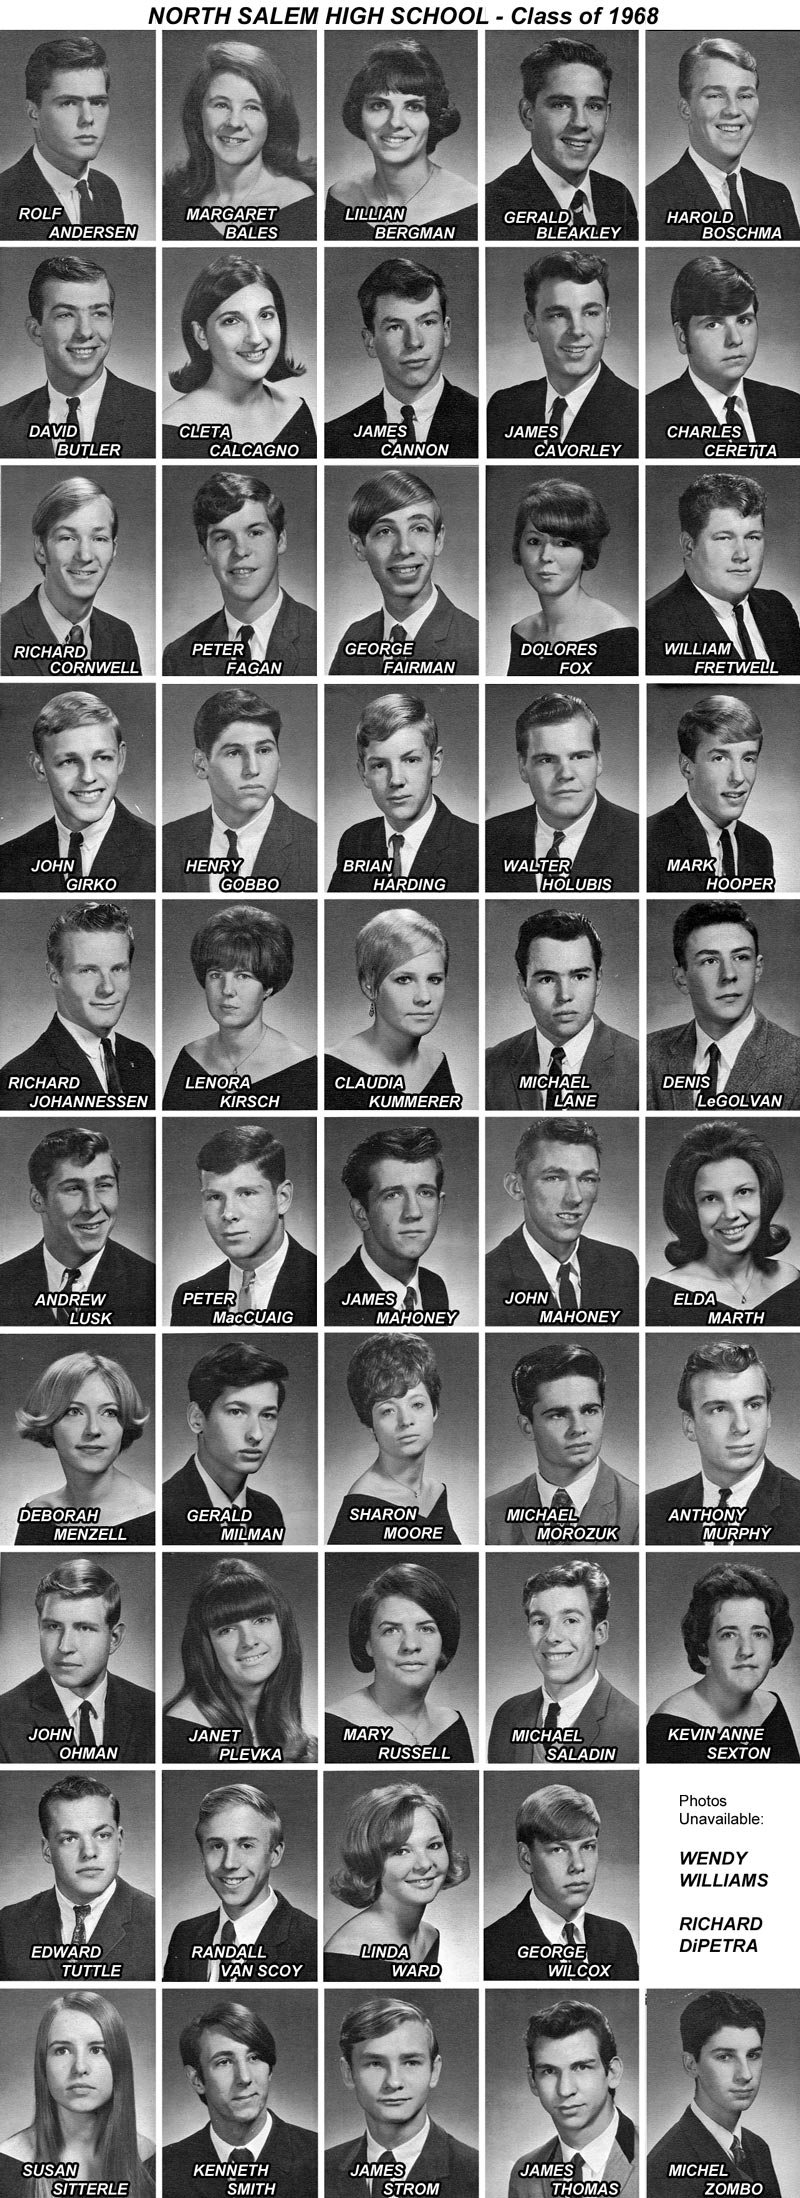 North Salem High School - Class of 1968